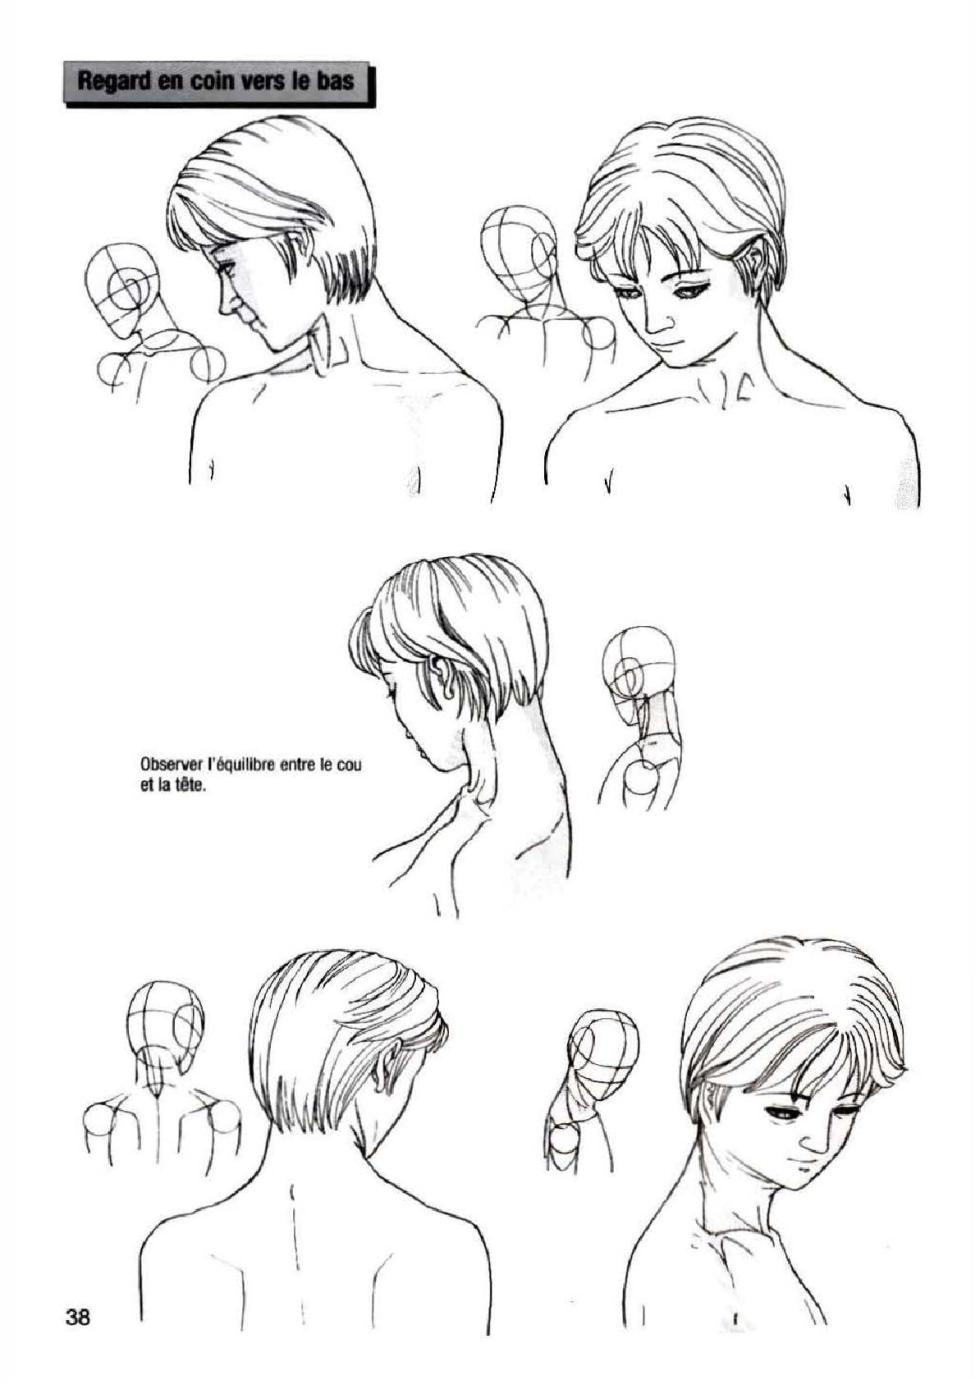 How To Draw Manga Vol. 25 Bodies and Anatomy - Page 38